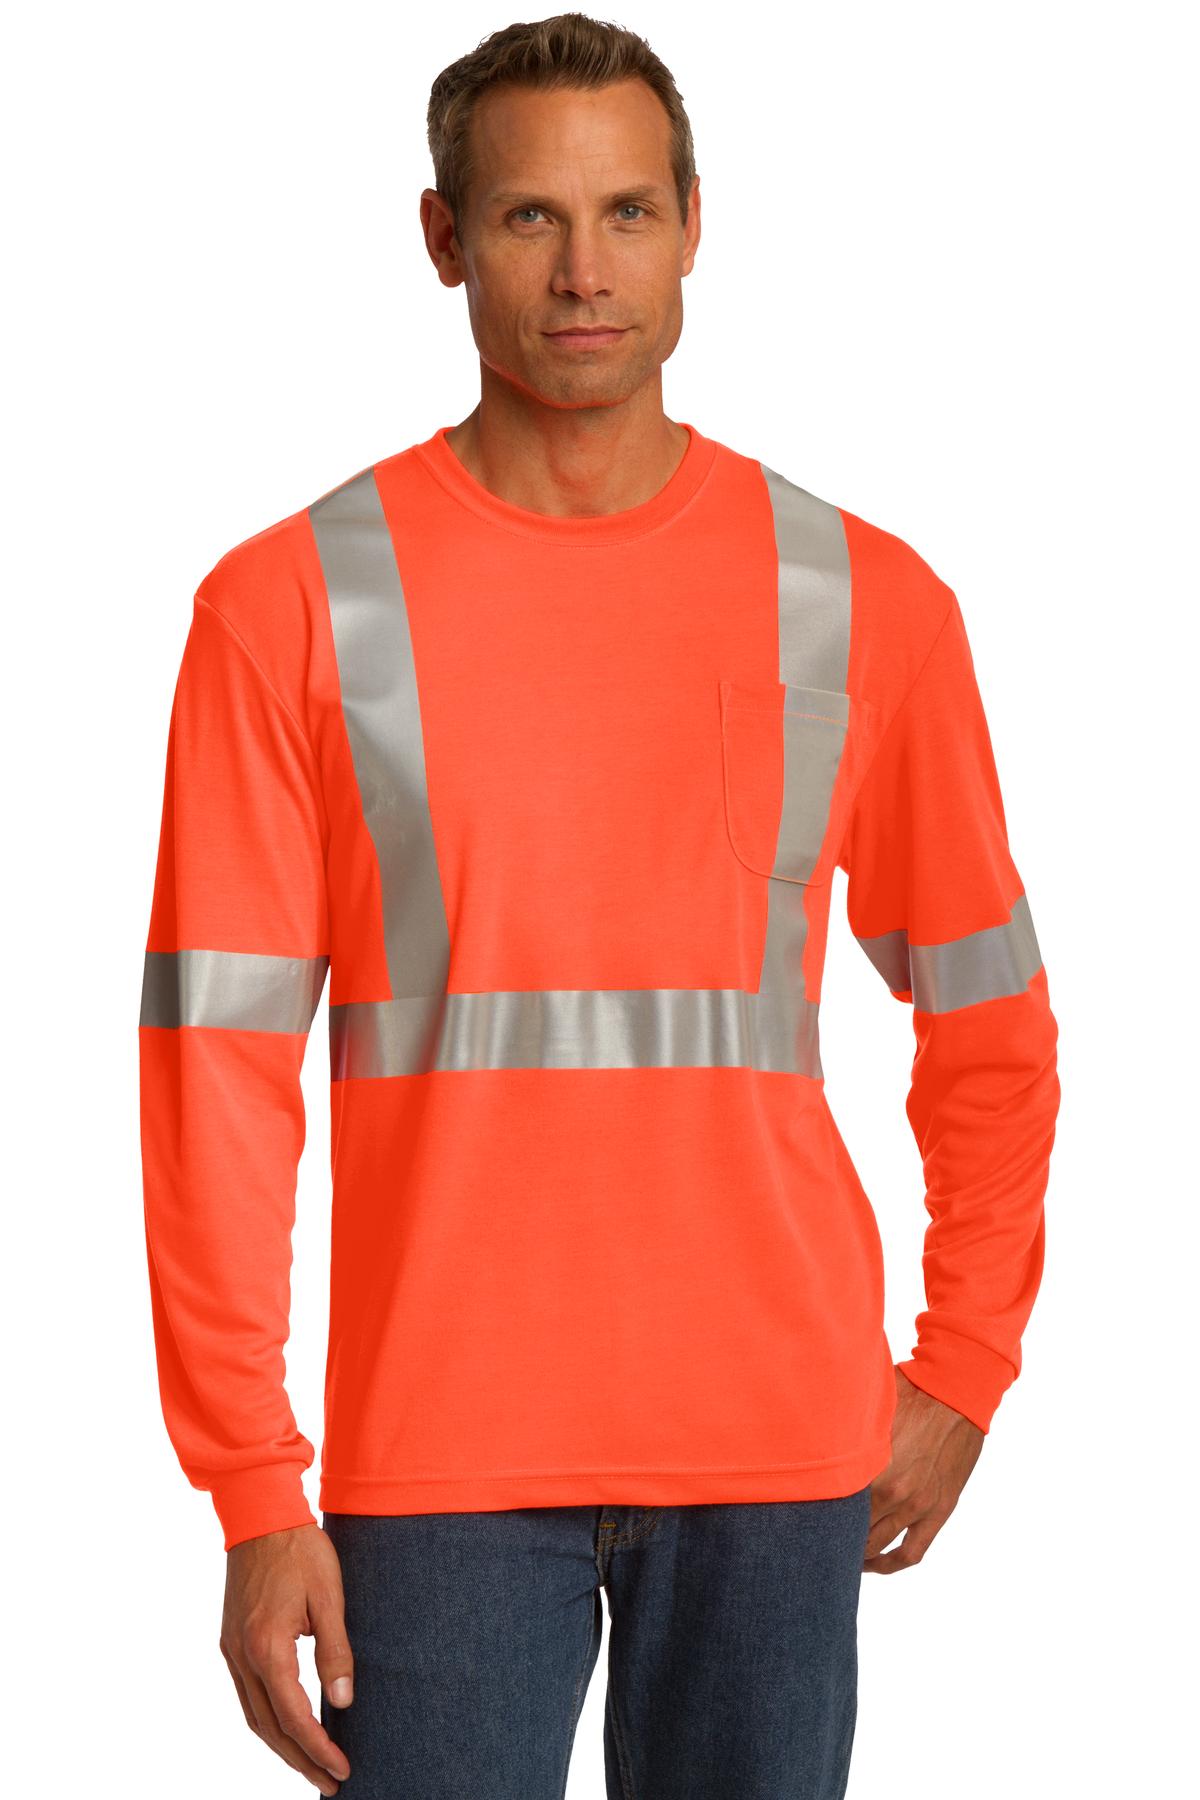 CornerStone ANSI 107 Class 2 Long Sleeve Safety T-Shirt-